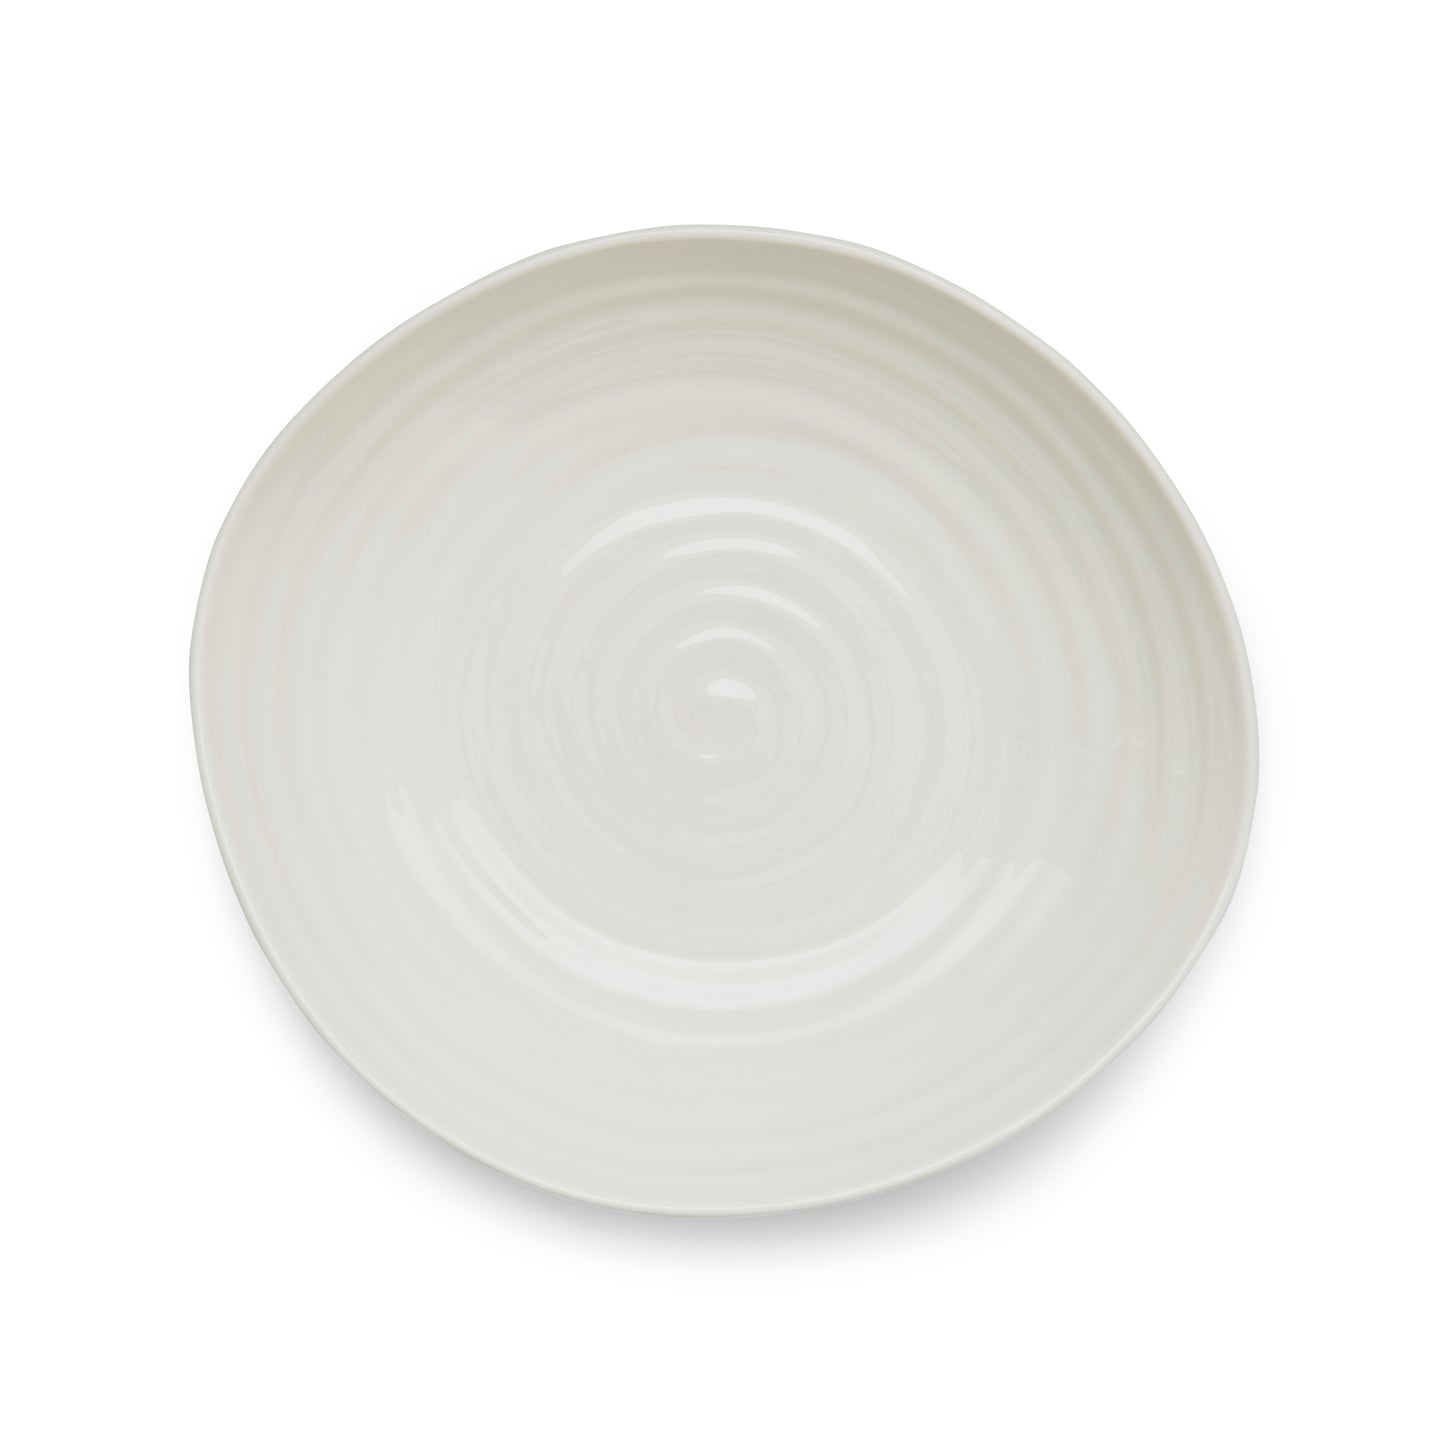 Sophie Conran for Portmeirion White Pasta Bowls set of 4